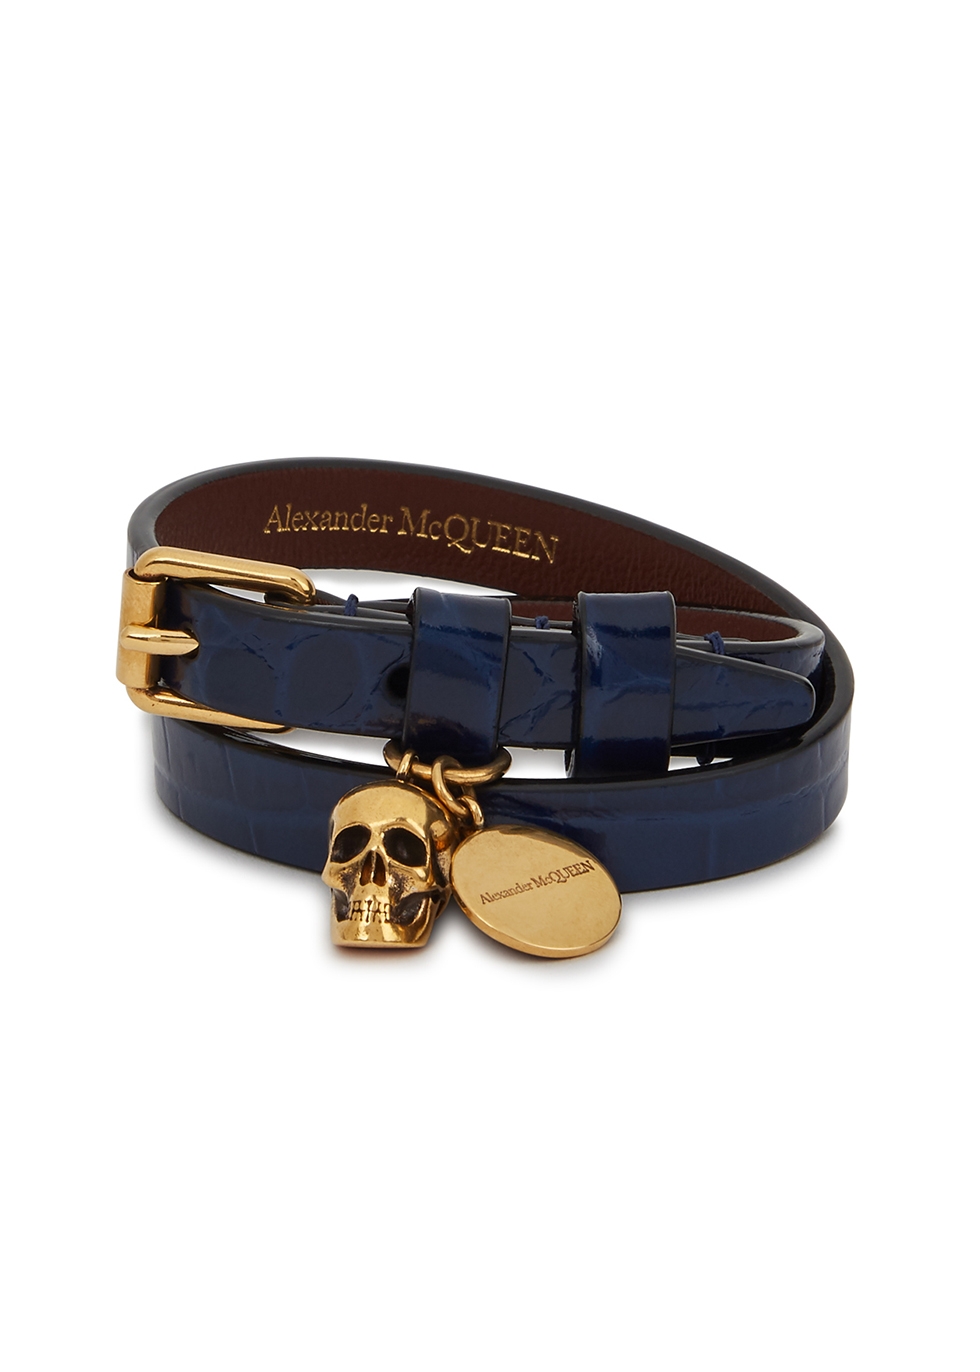 Alexander leather wrap bracelet - Harvey Nichols